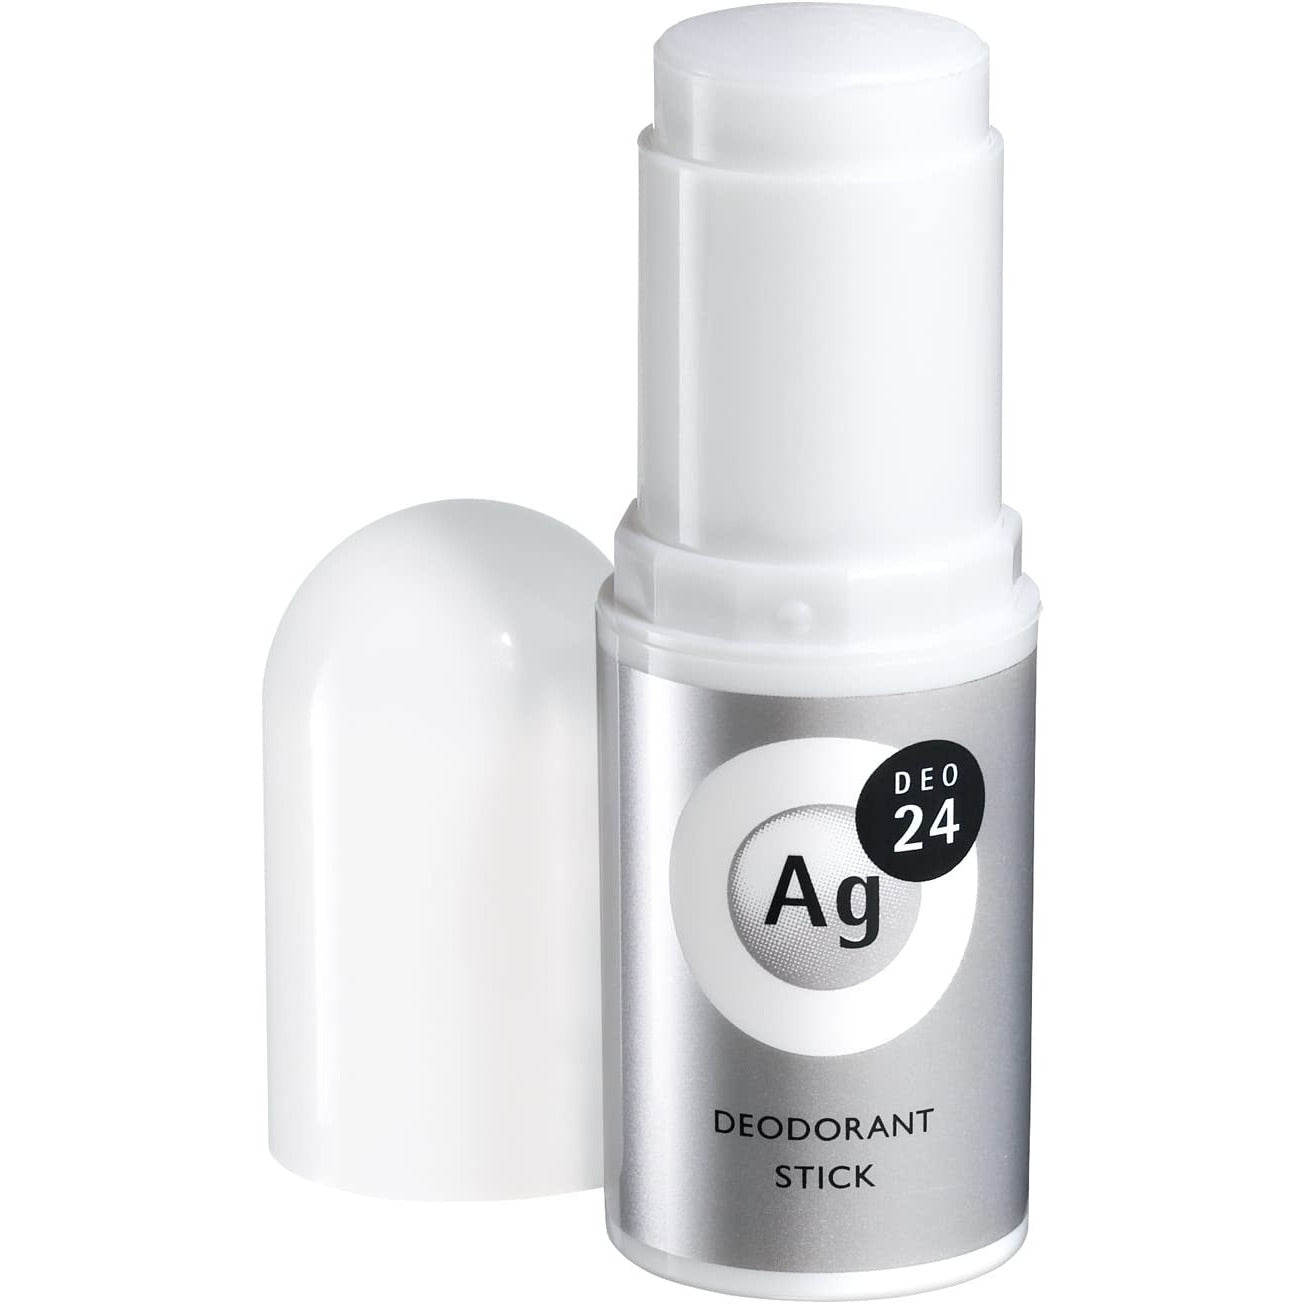 SHISEDO  AG Deo 24 Deodorant Stick EX Unscented 20g